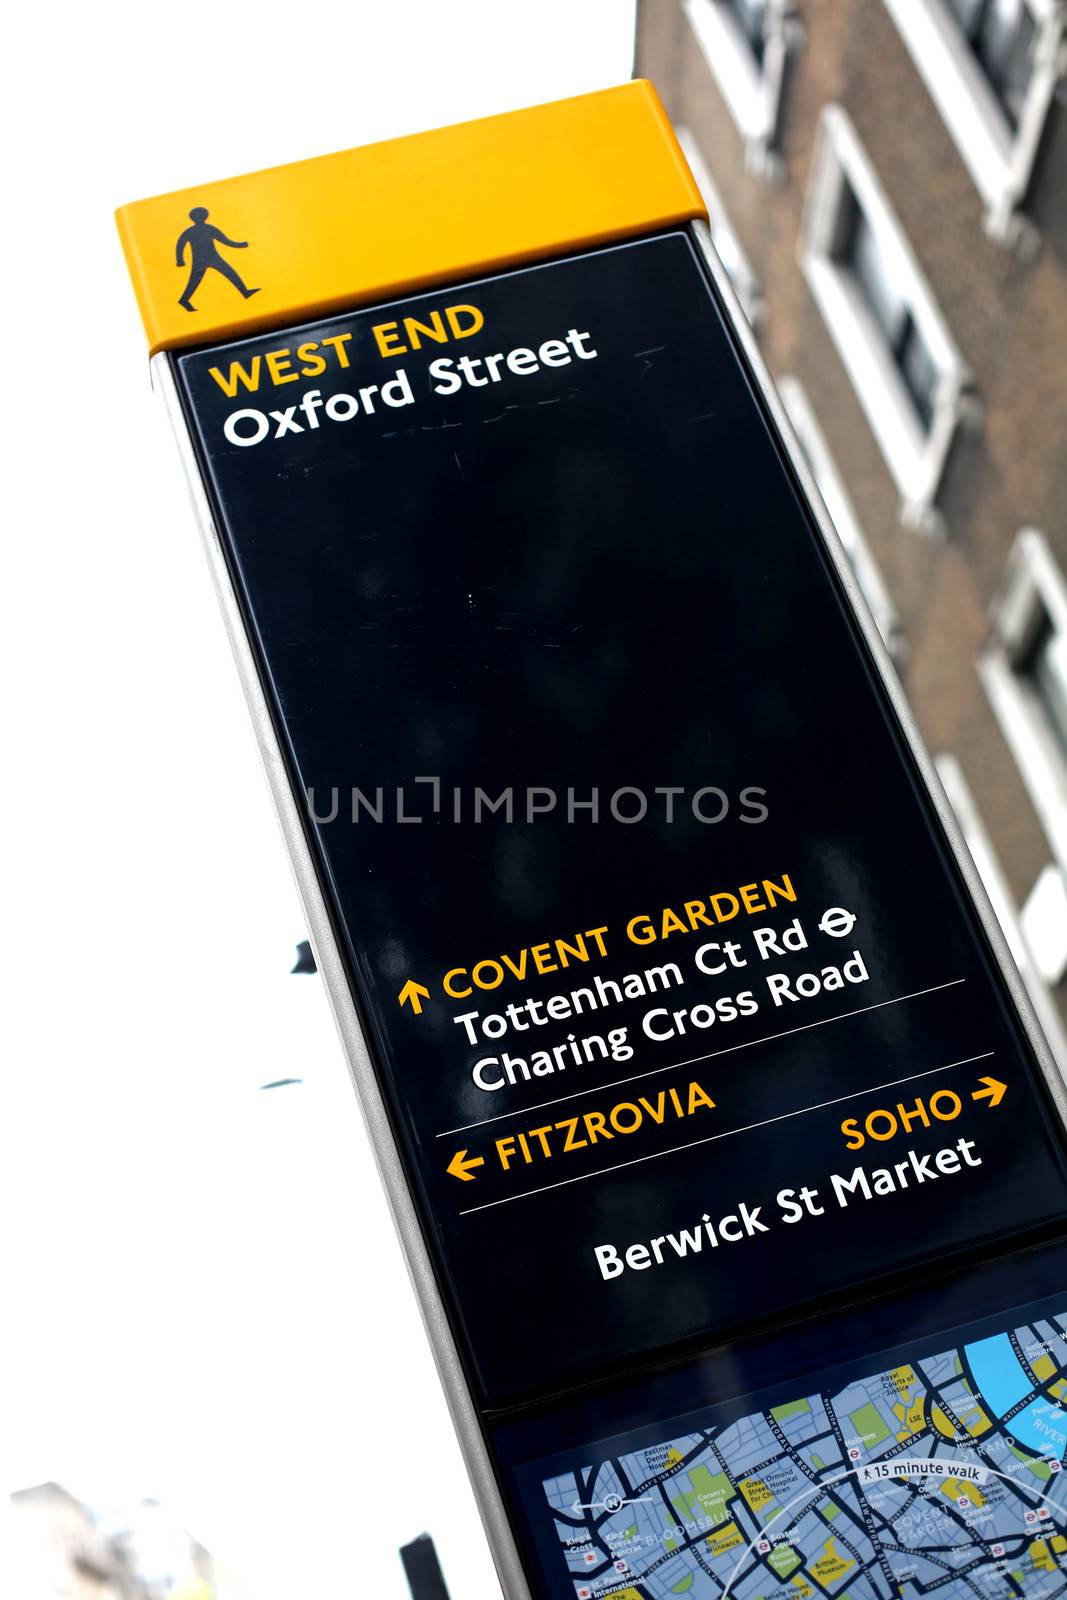 Oxford Street Tourist Guide London by Whiteboxmedia